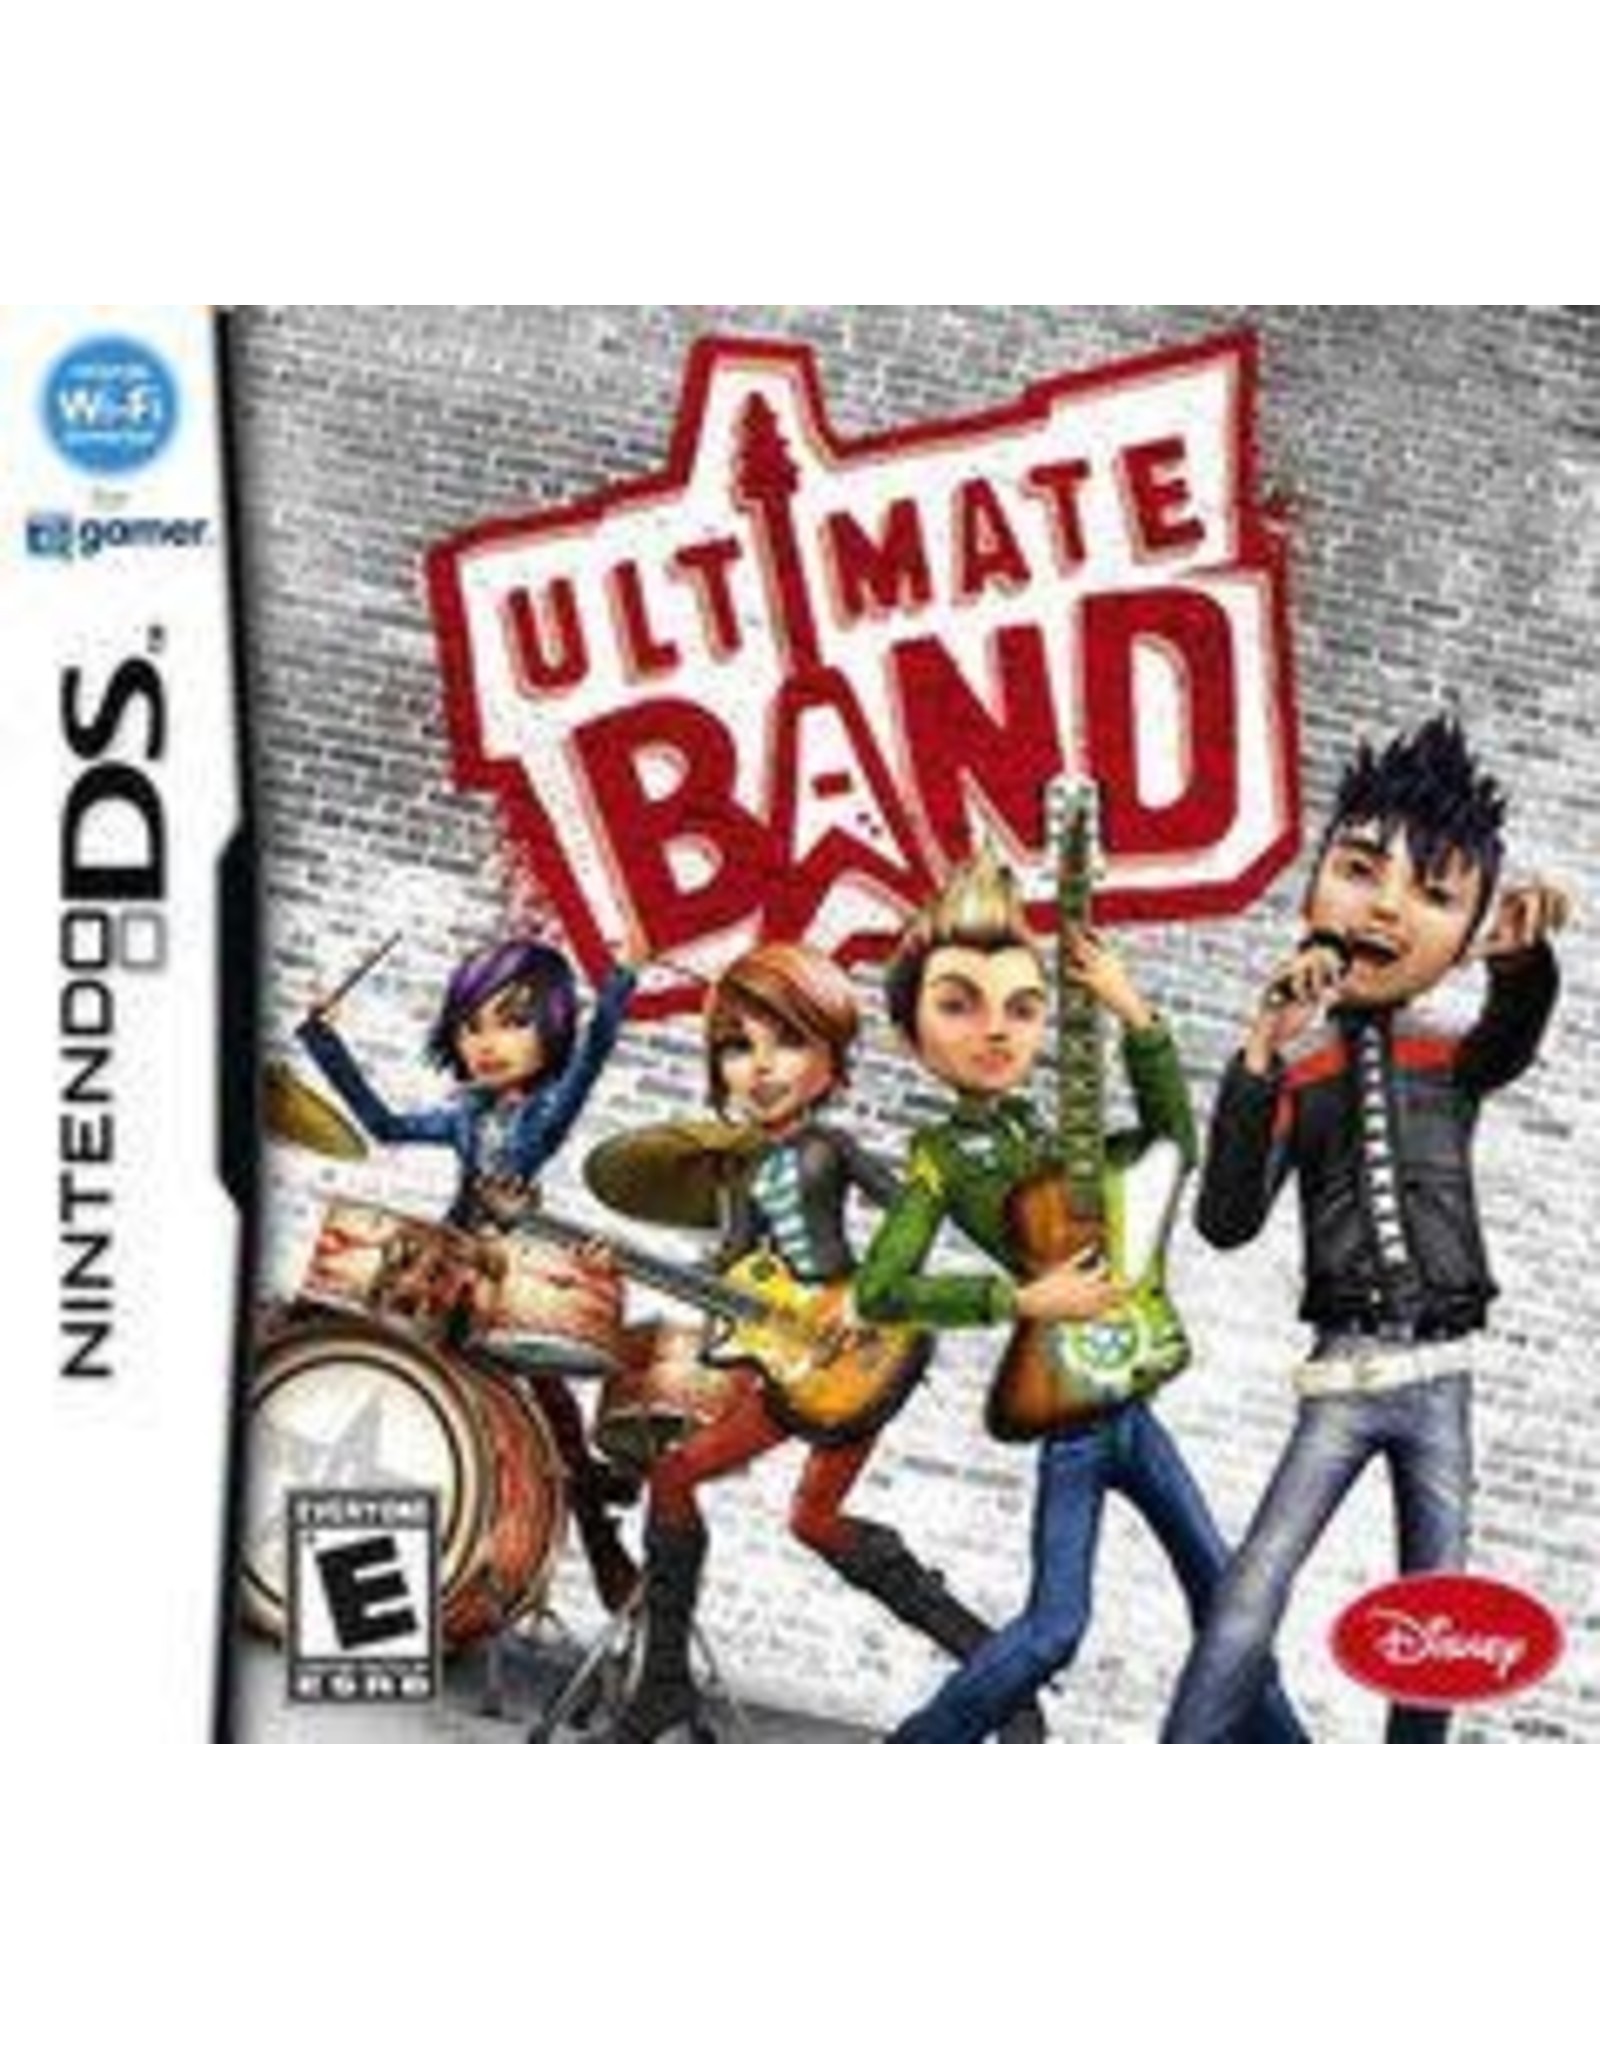 Nintendo DS Ultimate Band (CiB)